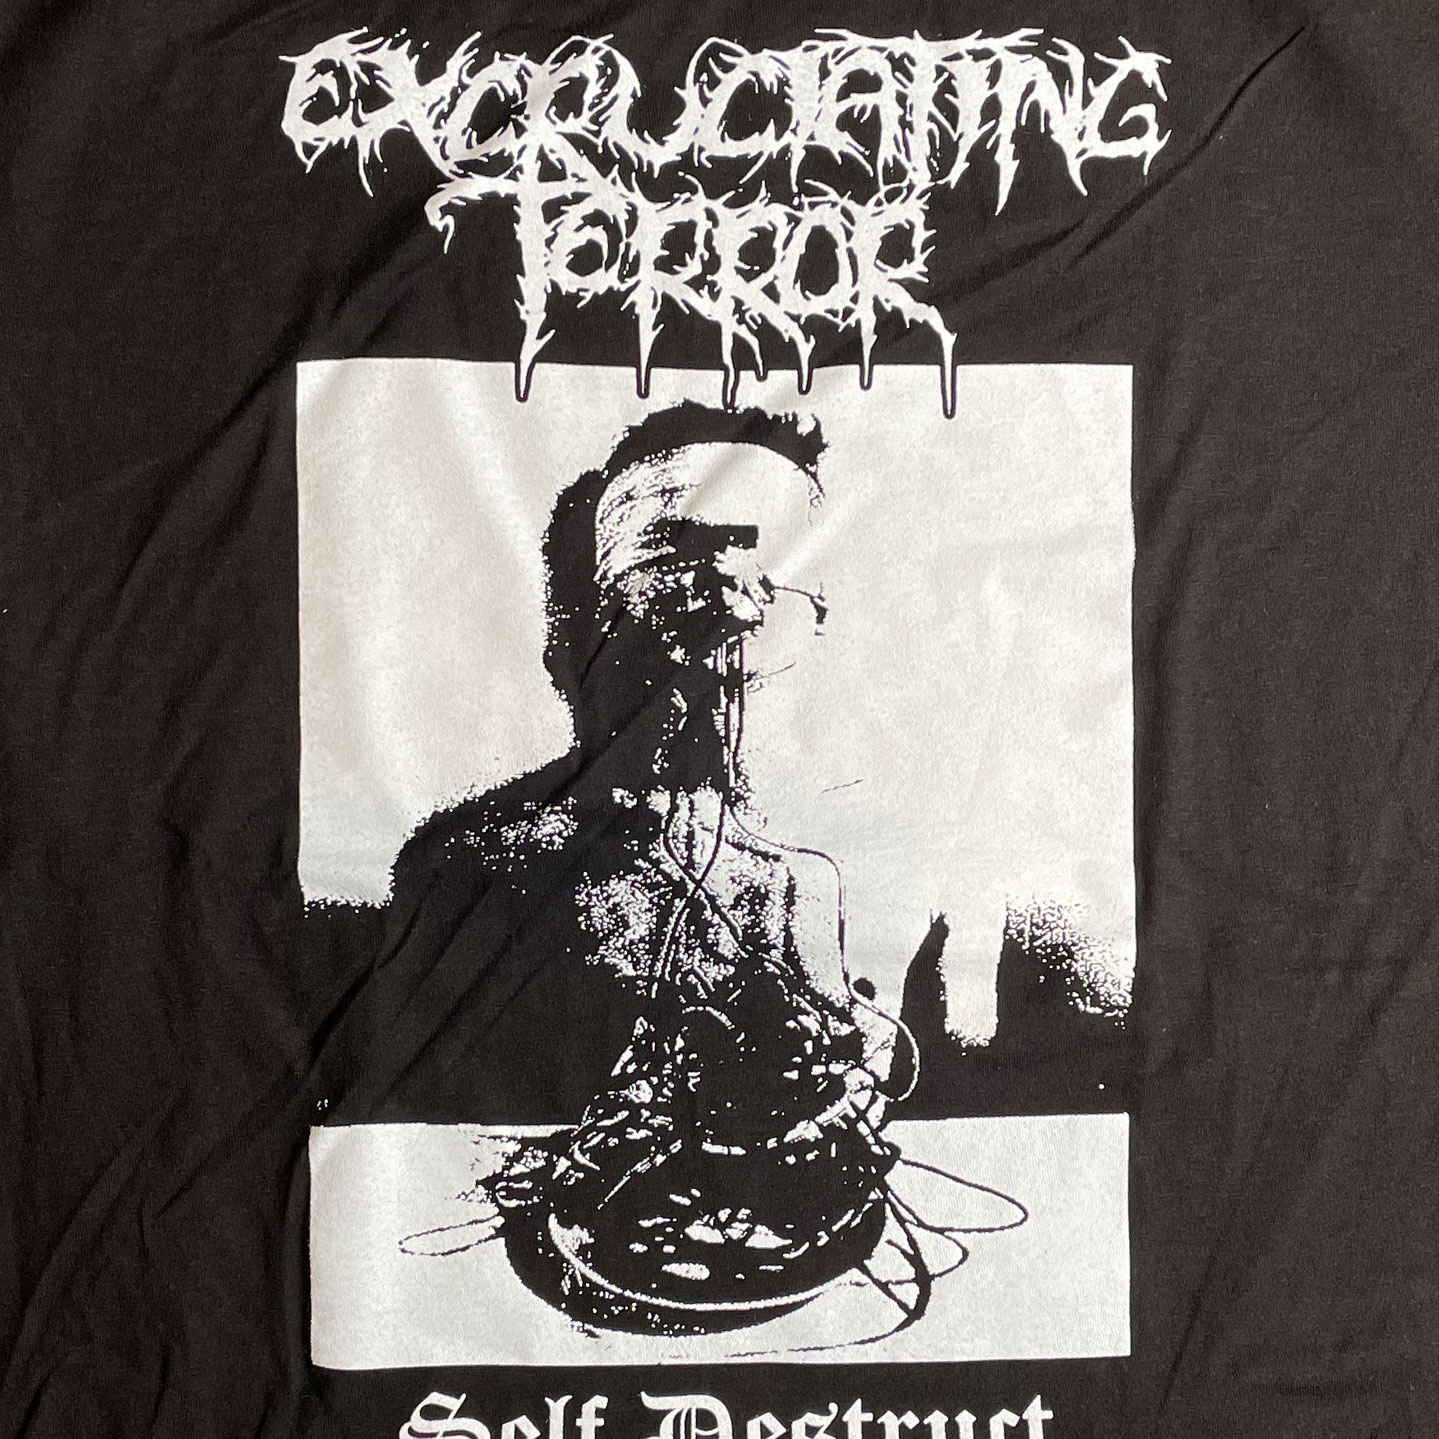 EXCRUCIATING TERROR Tシャツ Self Destruct オフィシャル！